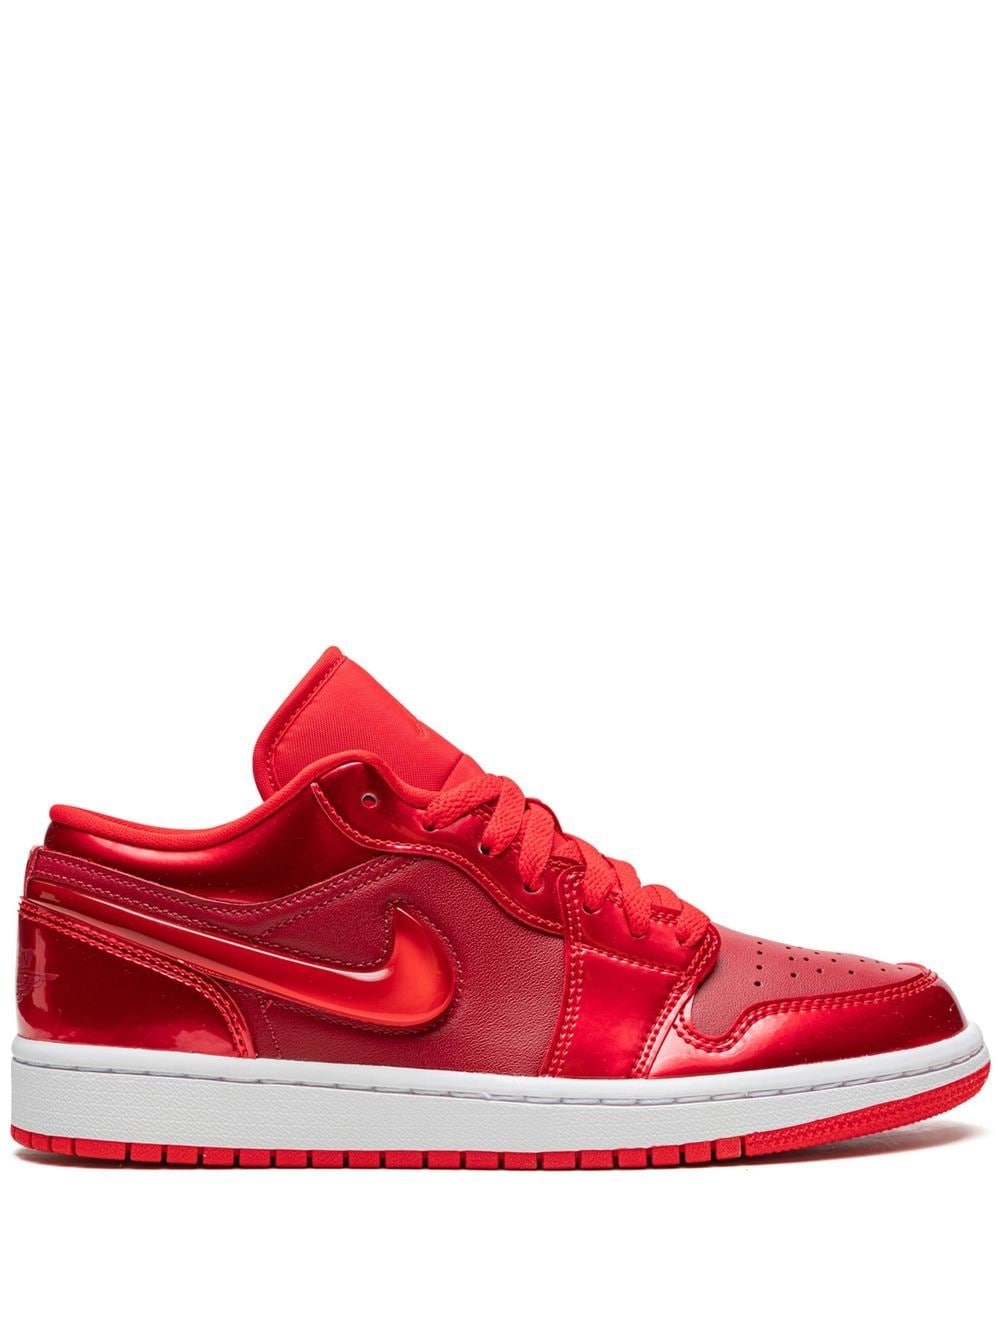 Image 1 of Nike Jordan 1 Low SE "Pomegranate" sneakers